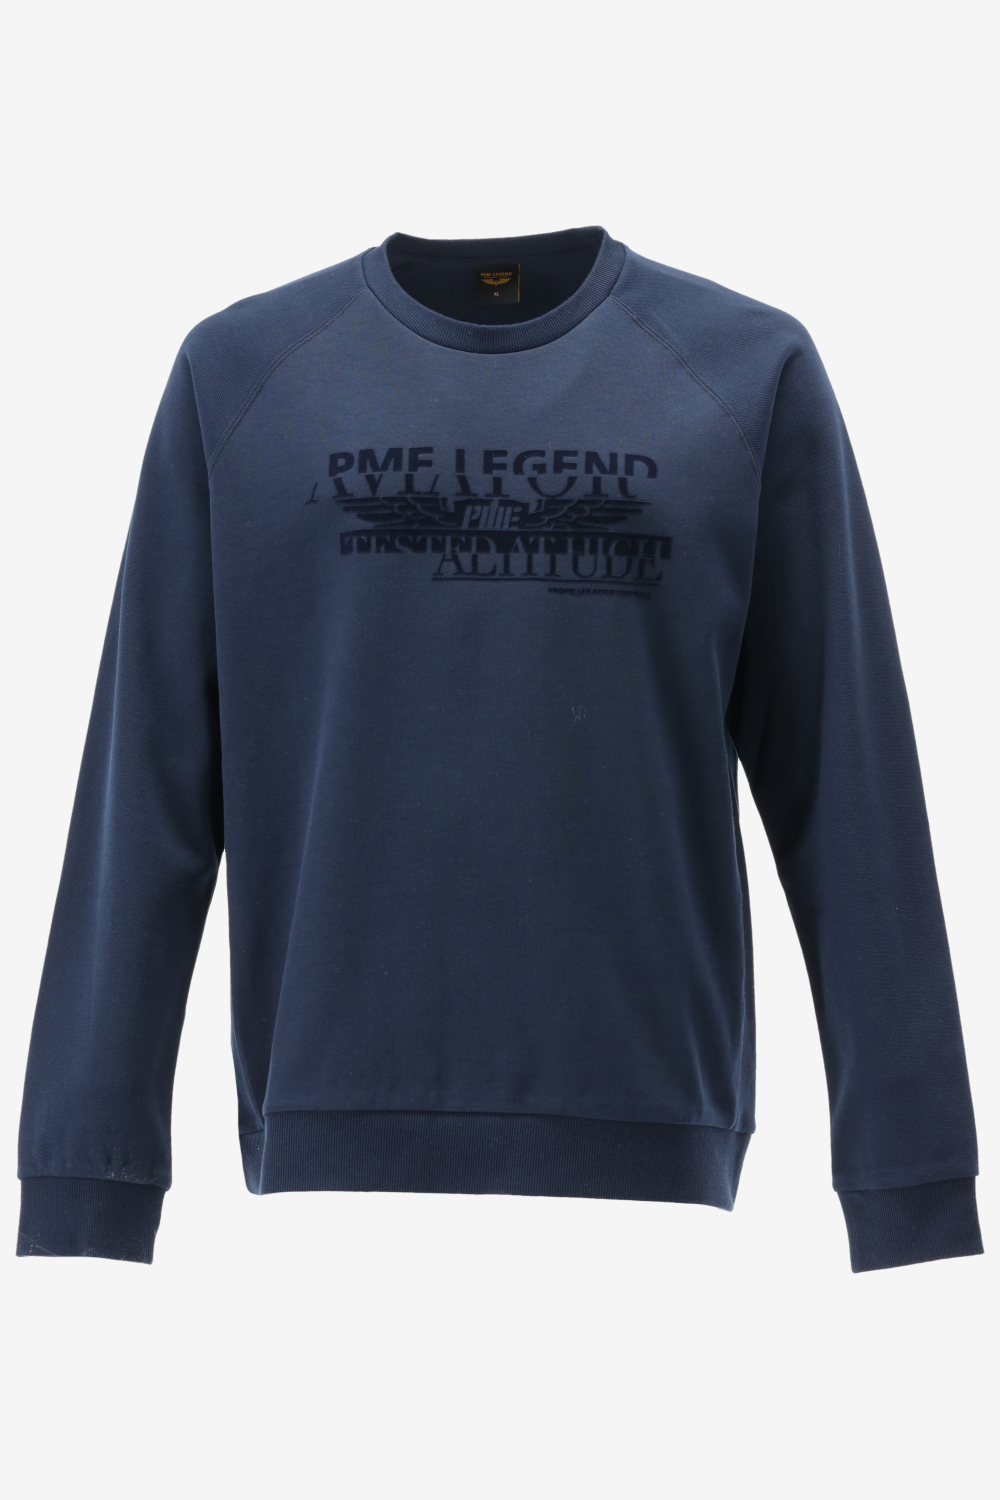 Pme legend sweater maat L